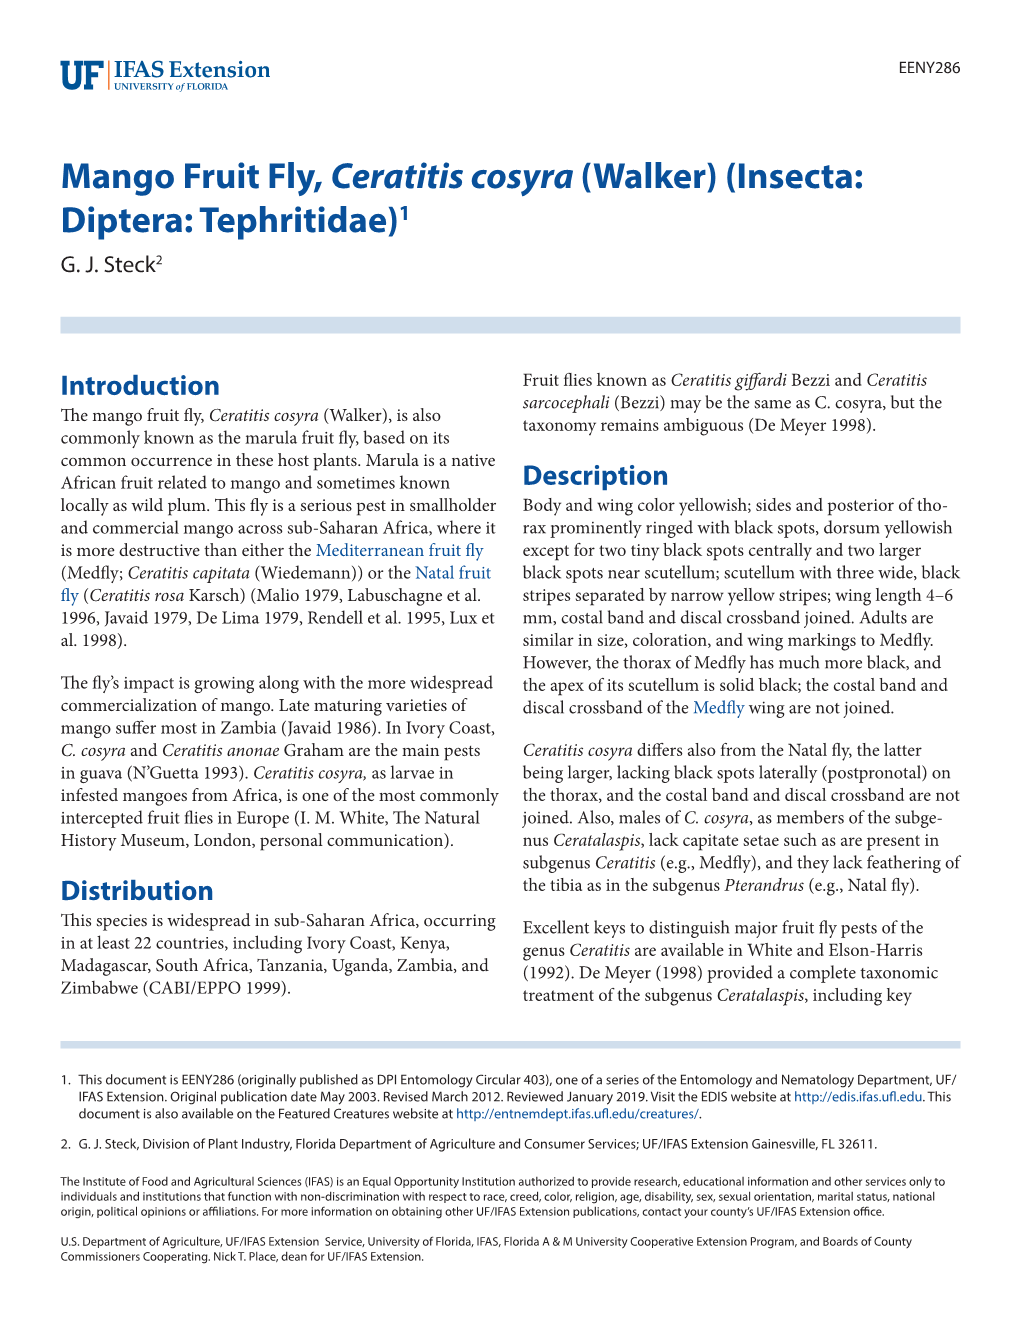 Mango Fruit Fly, Ceratitis Cosyra (Walker) (Insecta: Diptera: Tephritidae)1 G